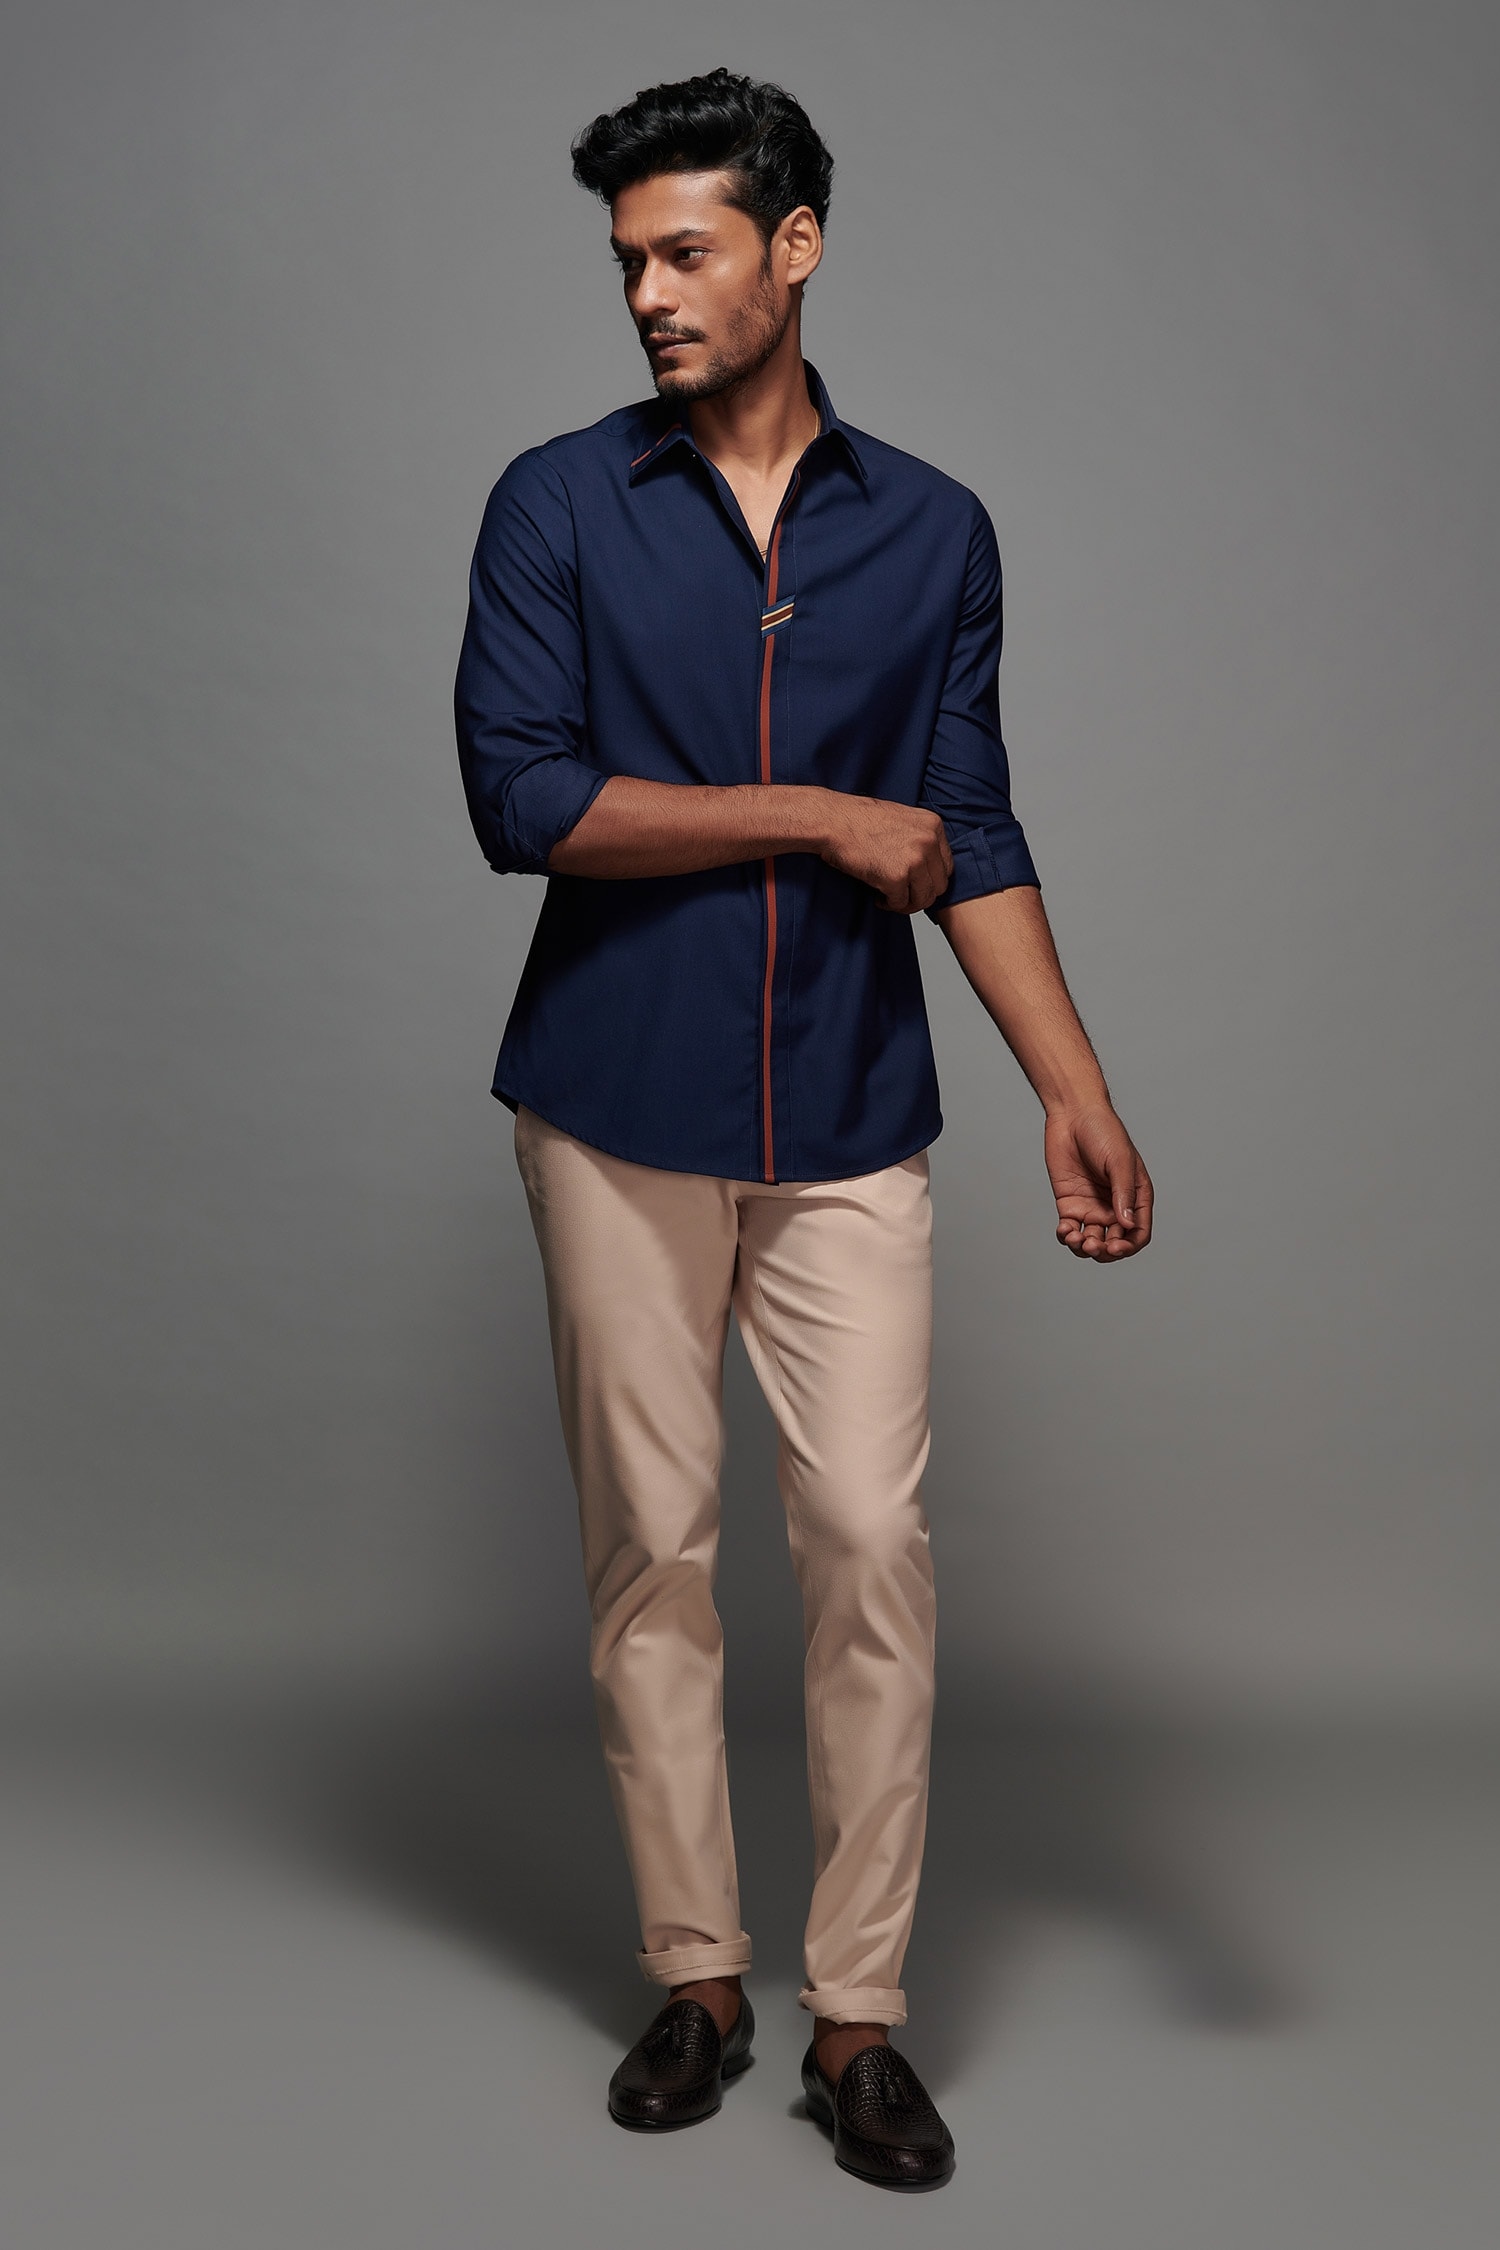 Next Look by Raymond Men Self Design Formal Dark Blue Shirt  Buy Next Look  by Raymond Men Self Design Formal Dark Blue Shirt Online at Best Prices in  India  Flipkartcom